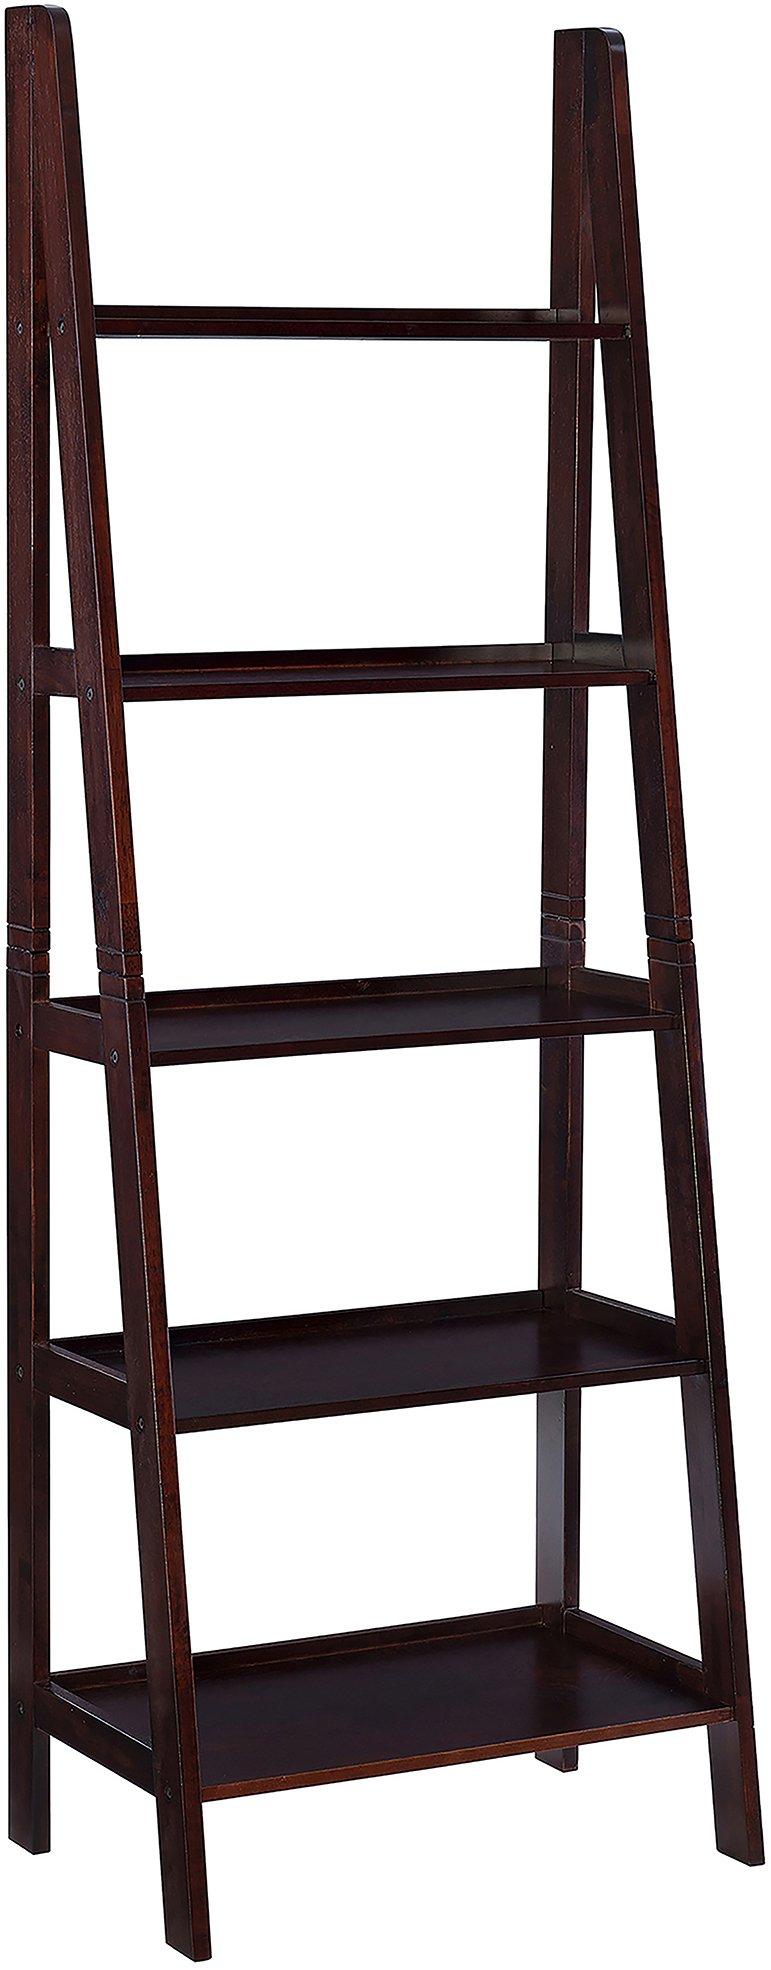 Linon Adara Ladder Display Shelf - 35x17x72